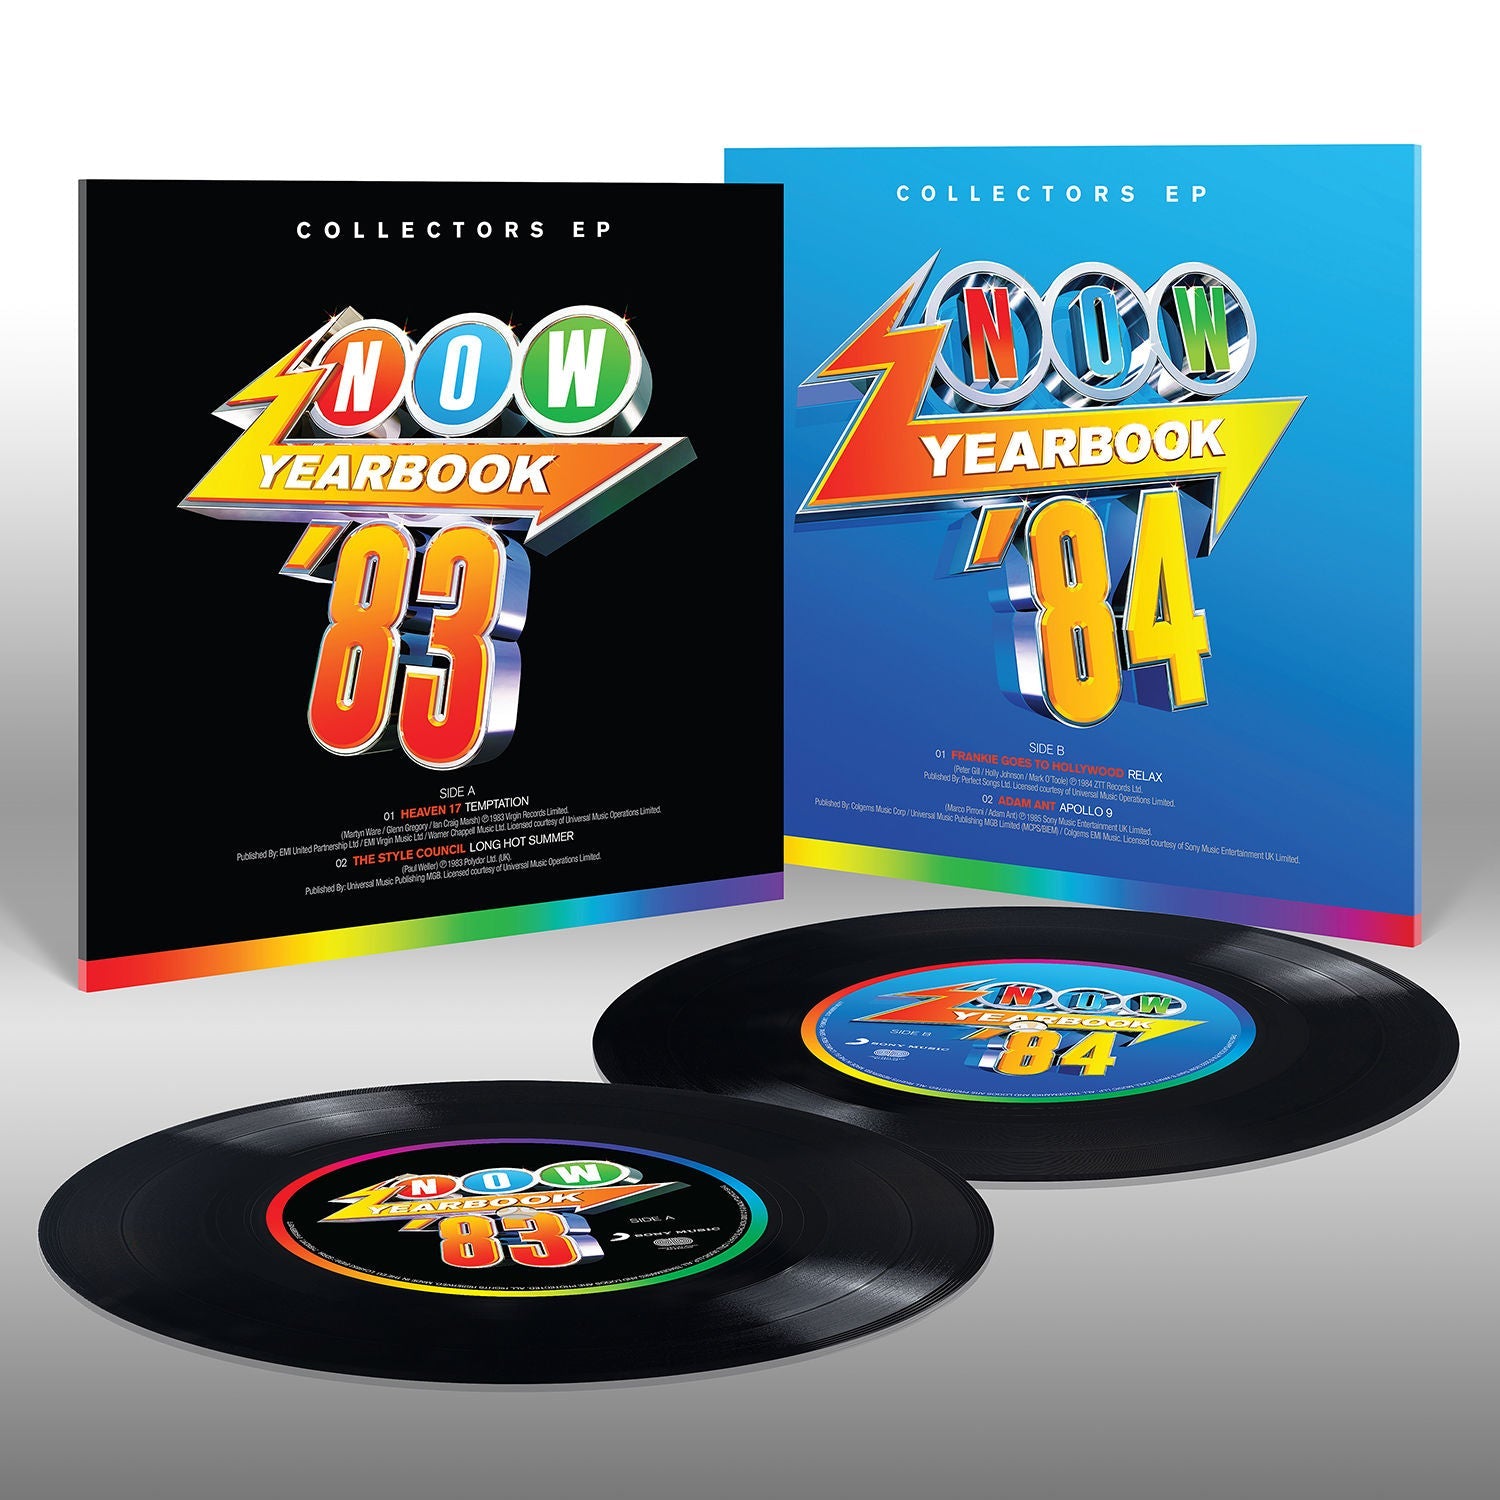 NOW - Yearbook 1980 - 1984: Vinyl Extra (5LP Boxset) & NOW Yearbook – Collectors EP 7” Single